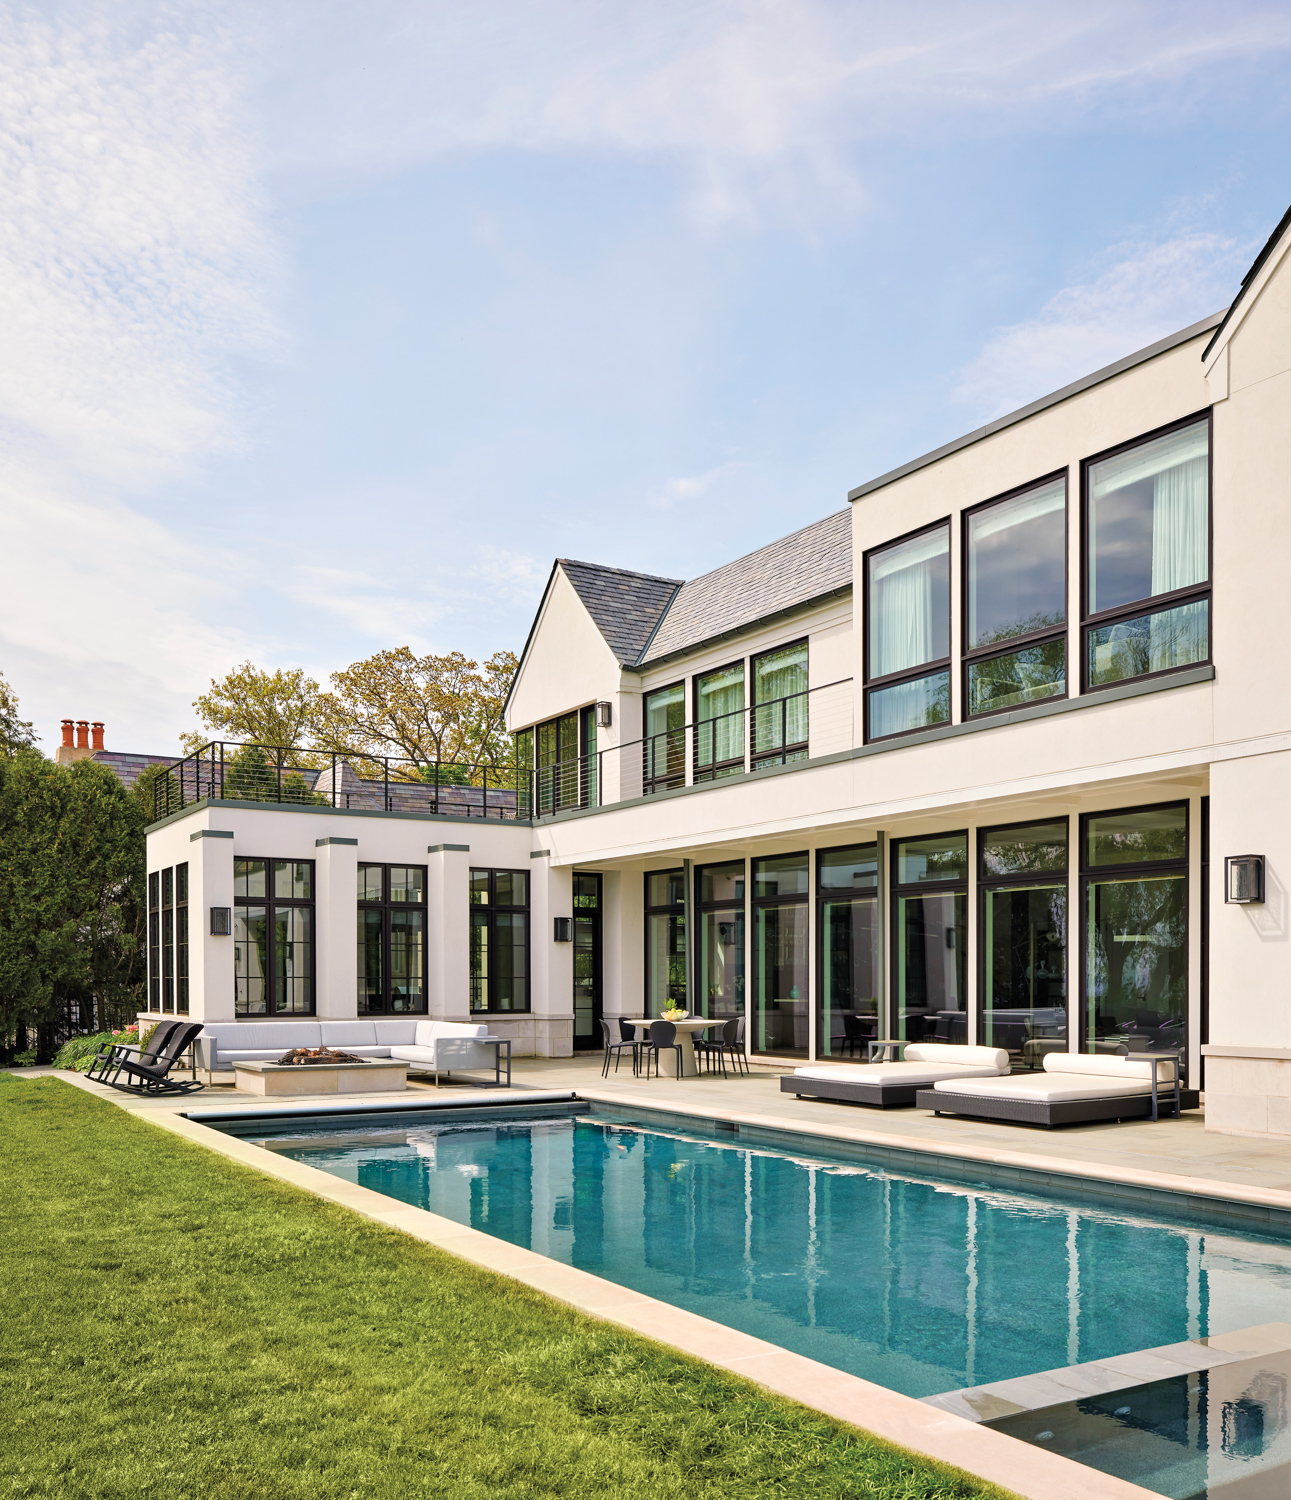 Backyard of modern home with large pool